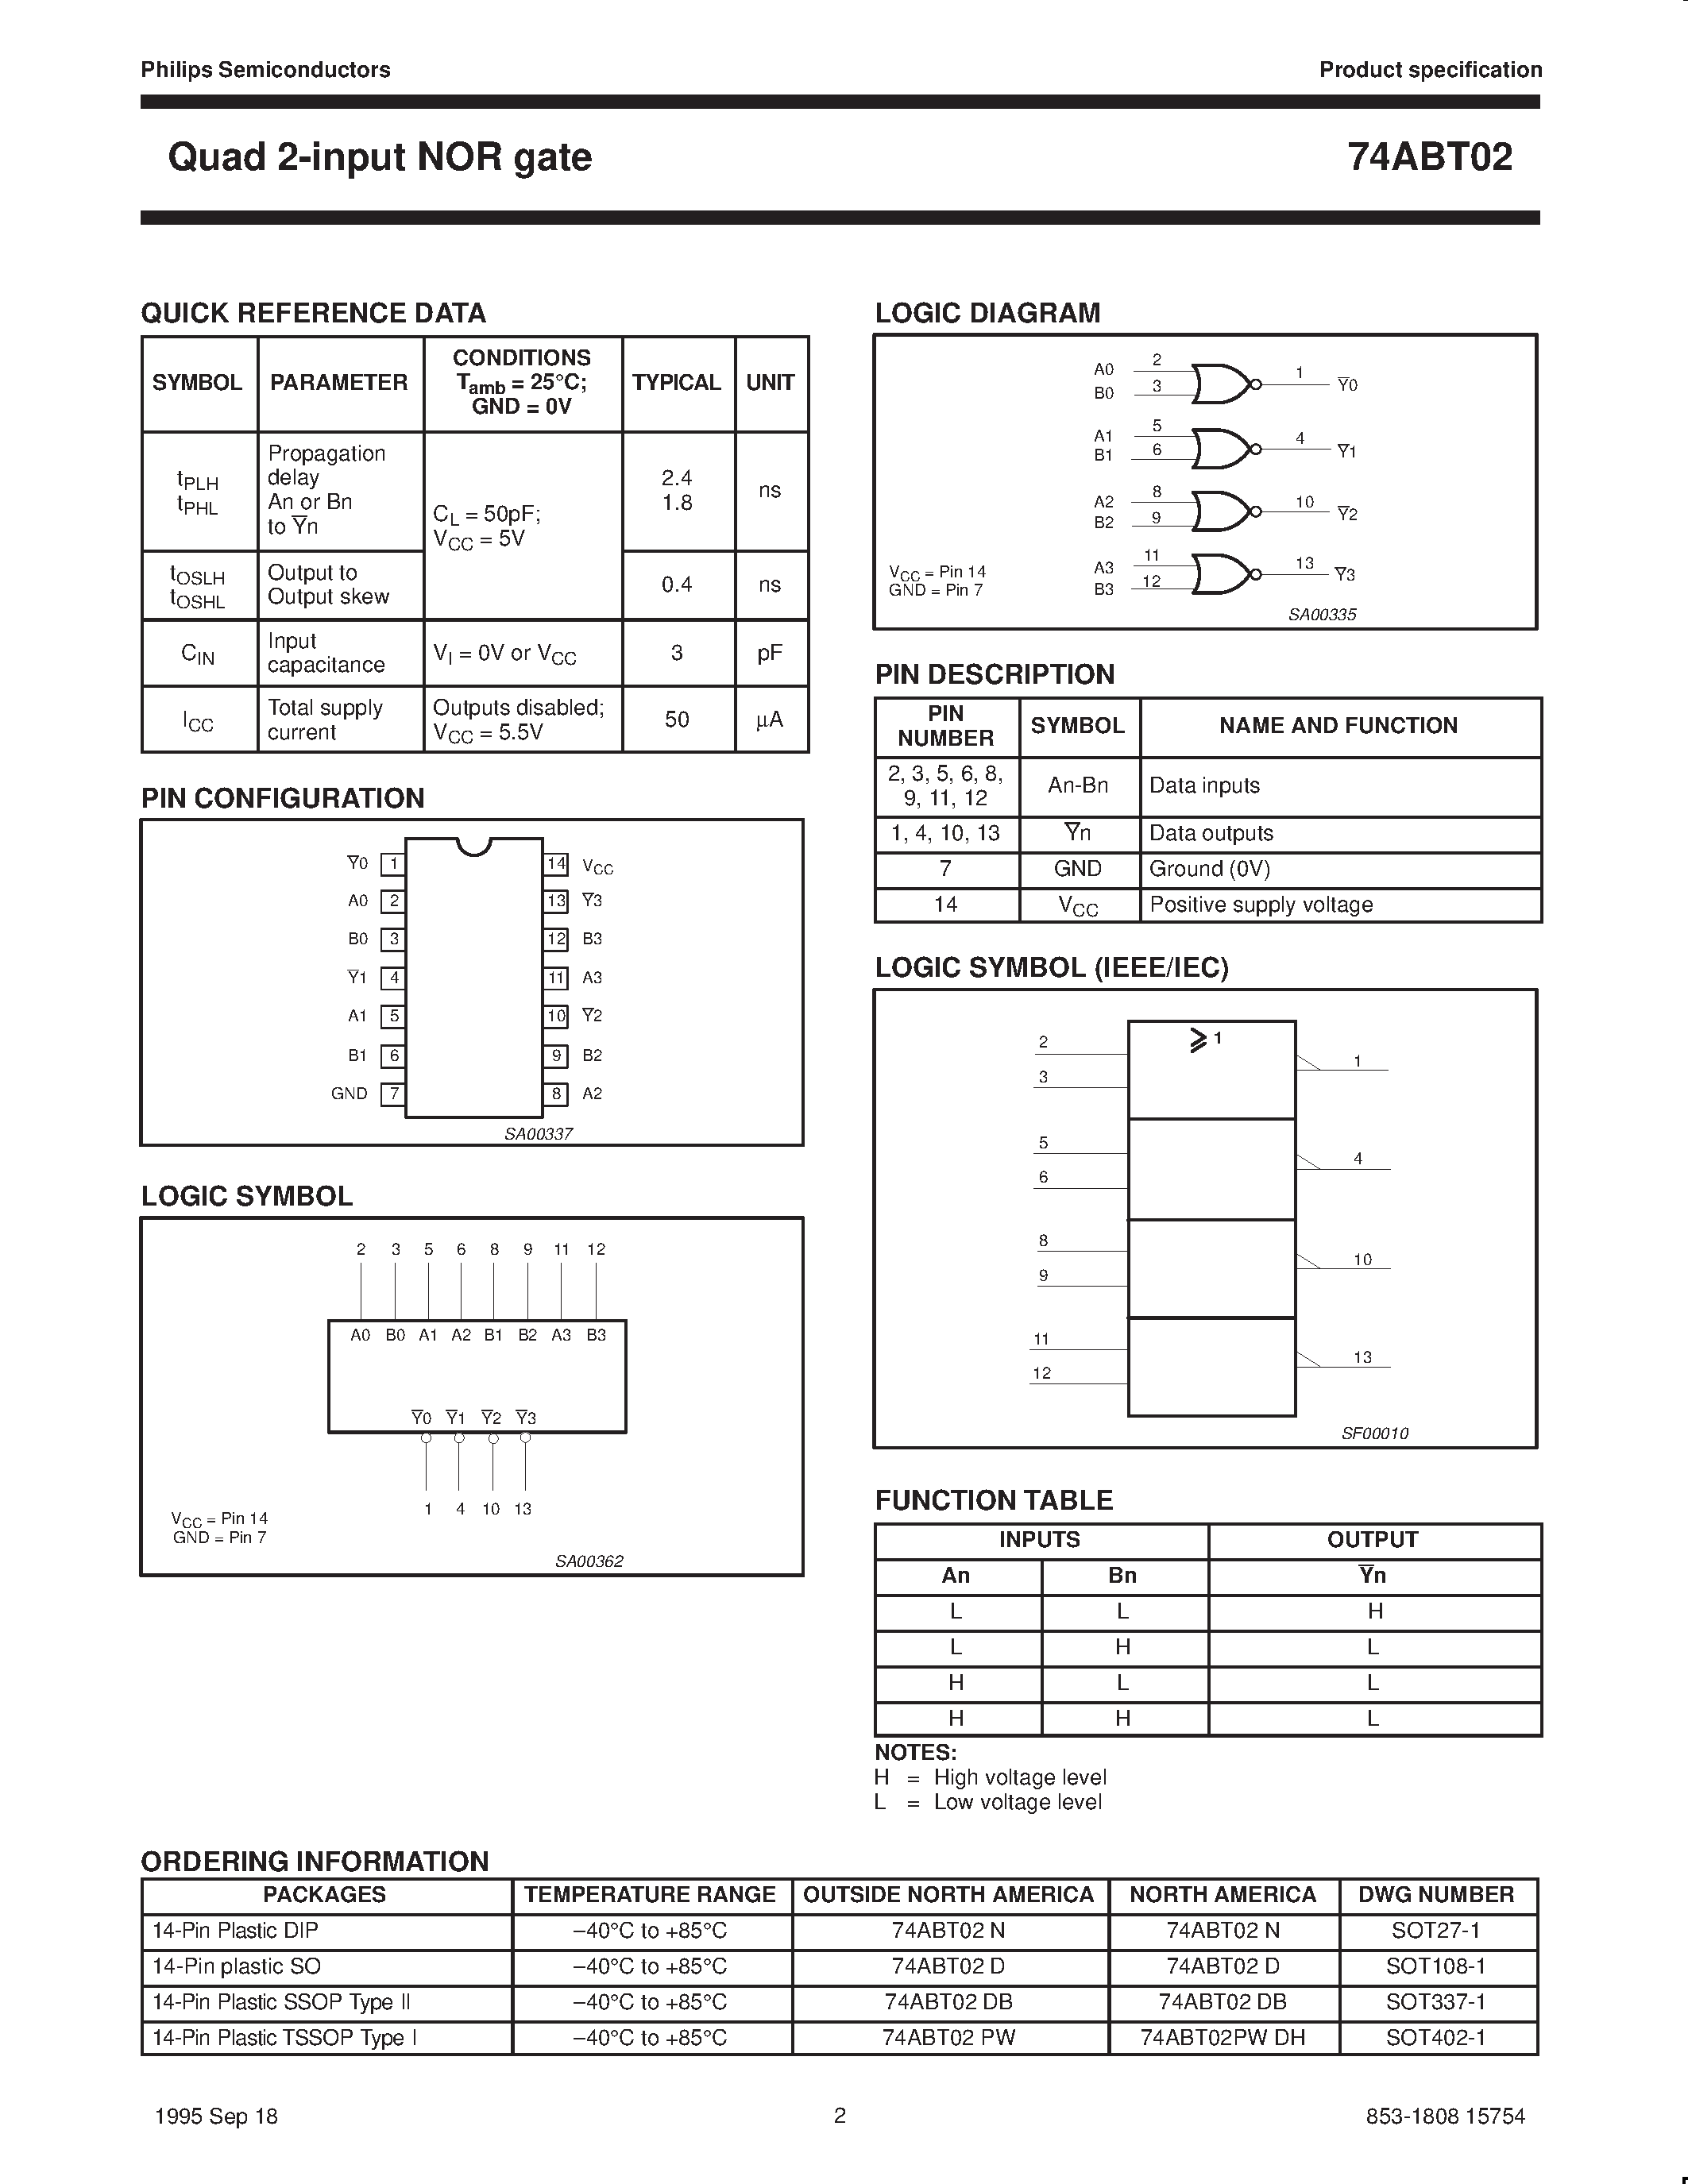 Datasheet 74ABT02PWDH - Quad 2-input NOR gate page 2